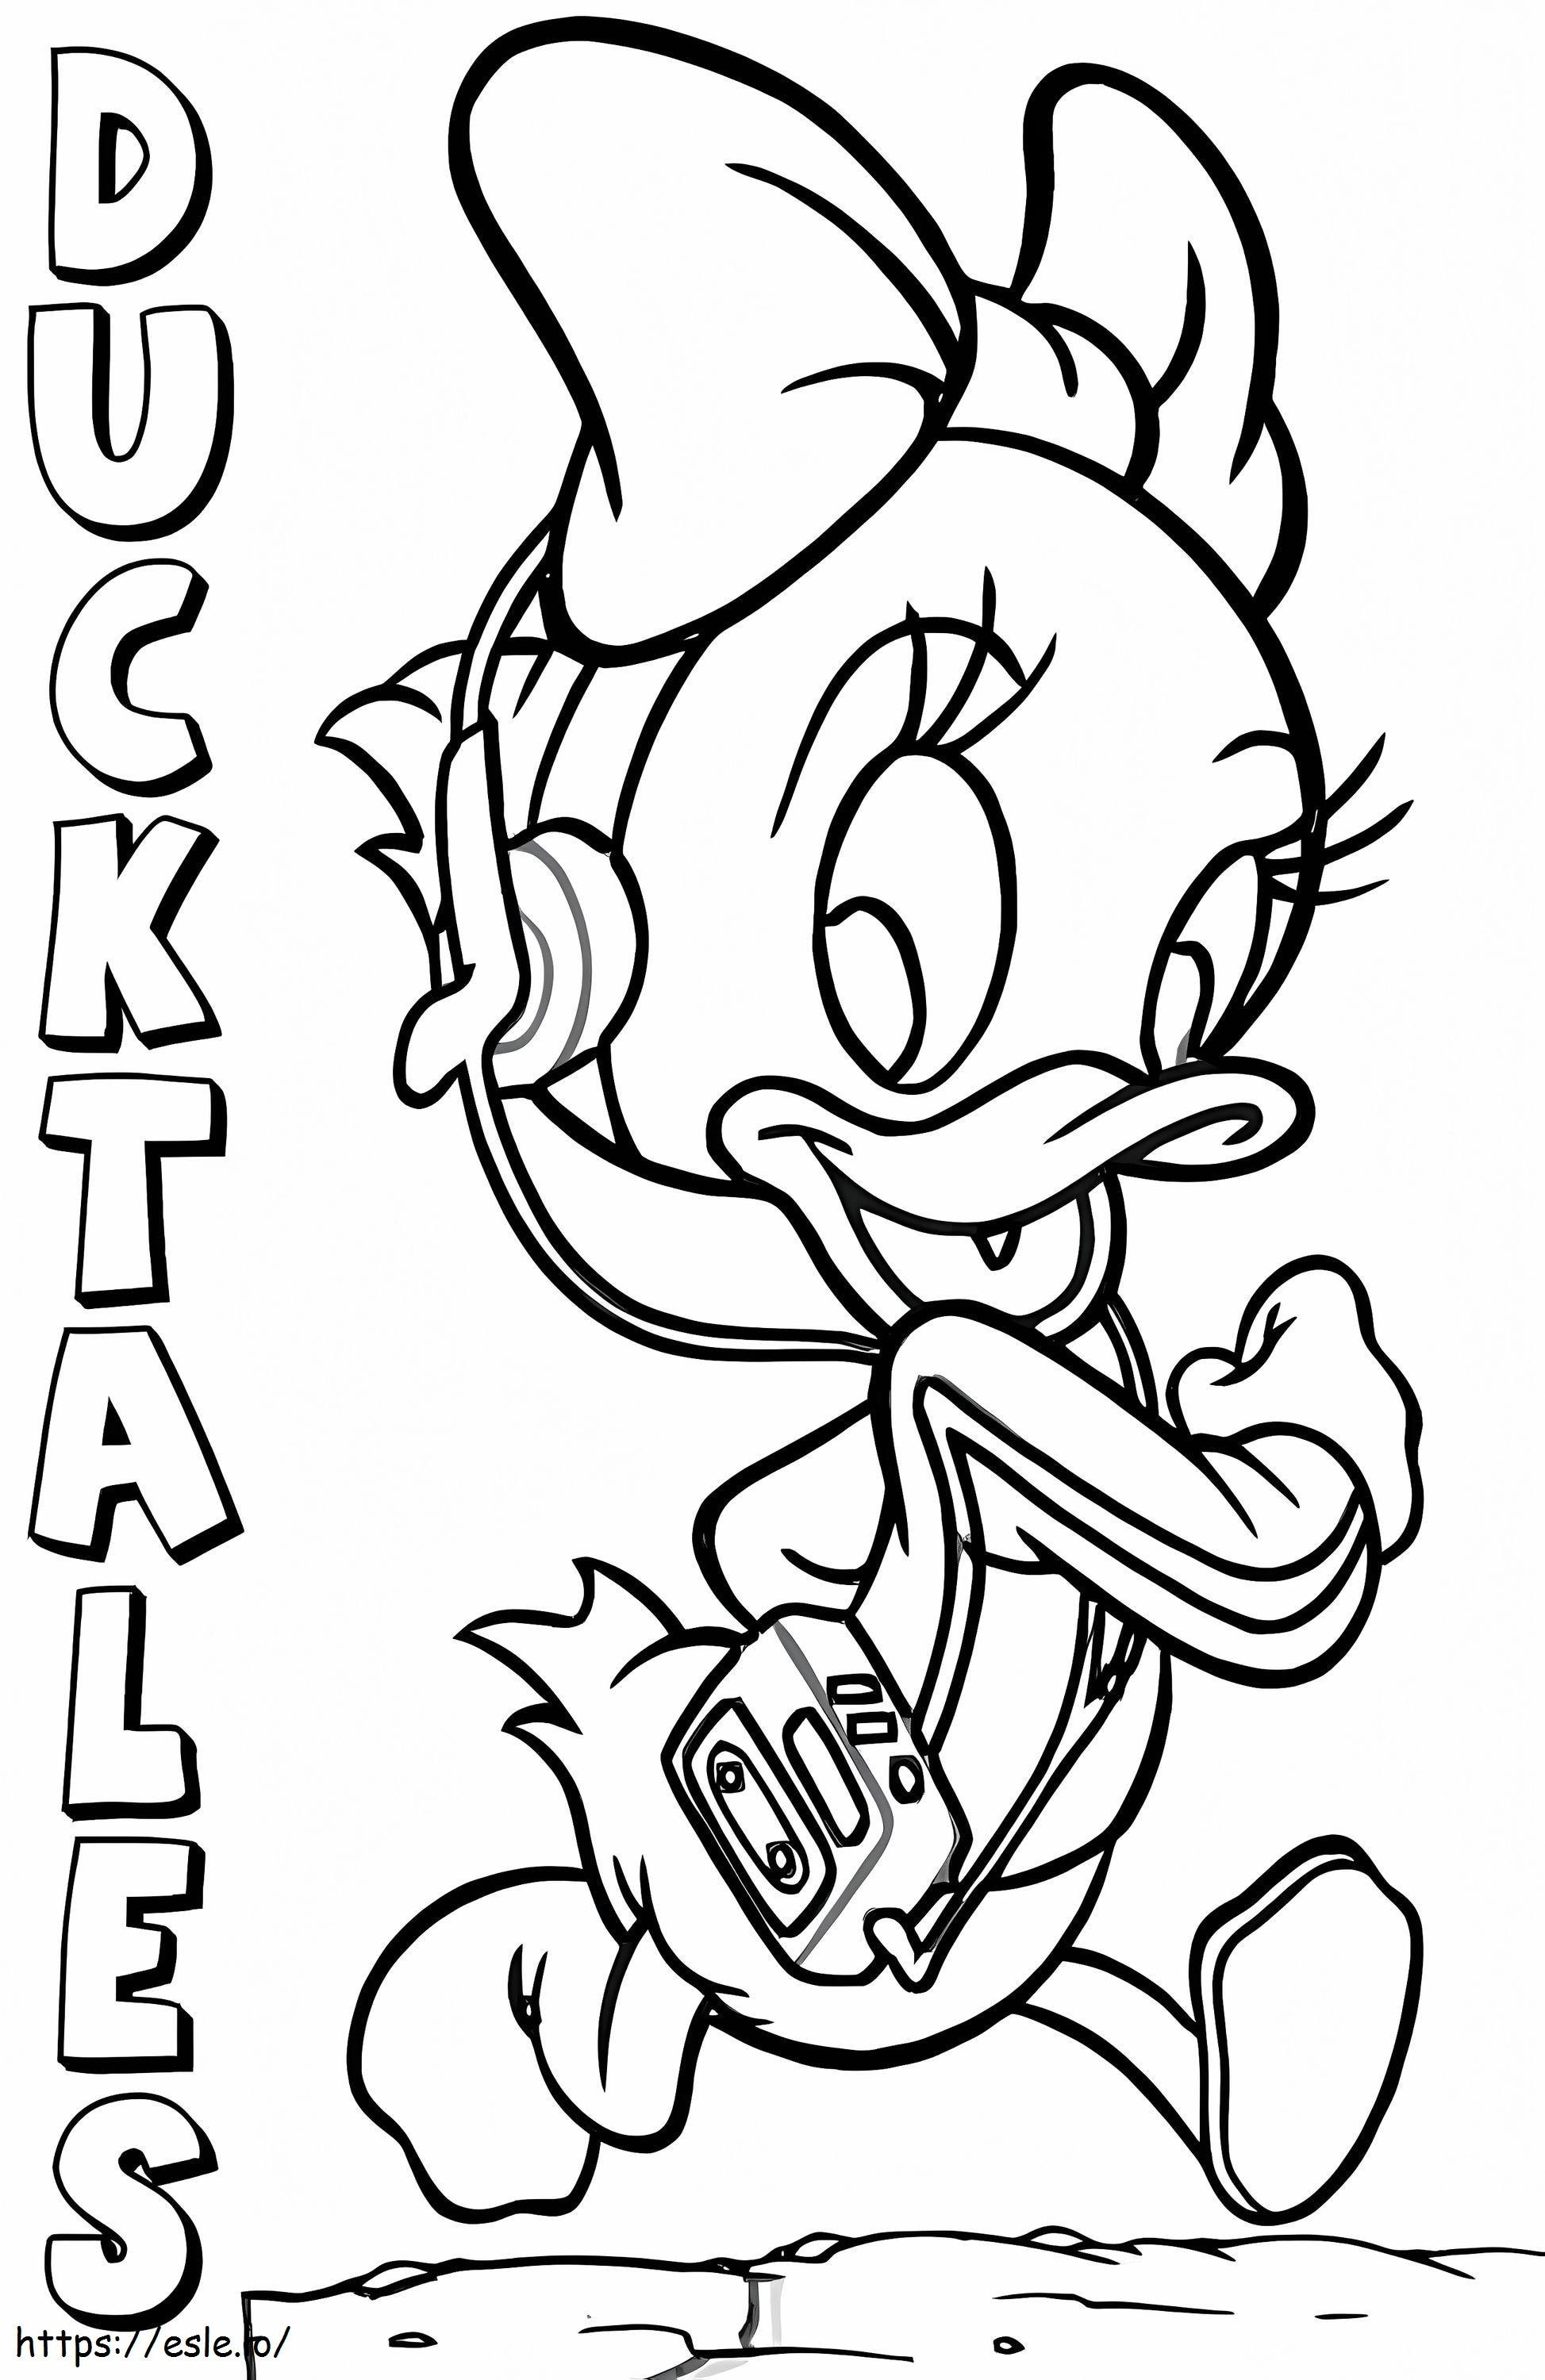 Coloriage Webby Vanderquack et Ducktales à imprimer dessin